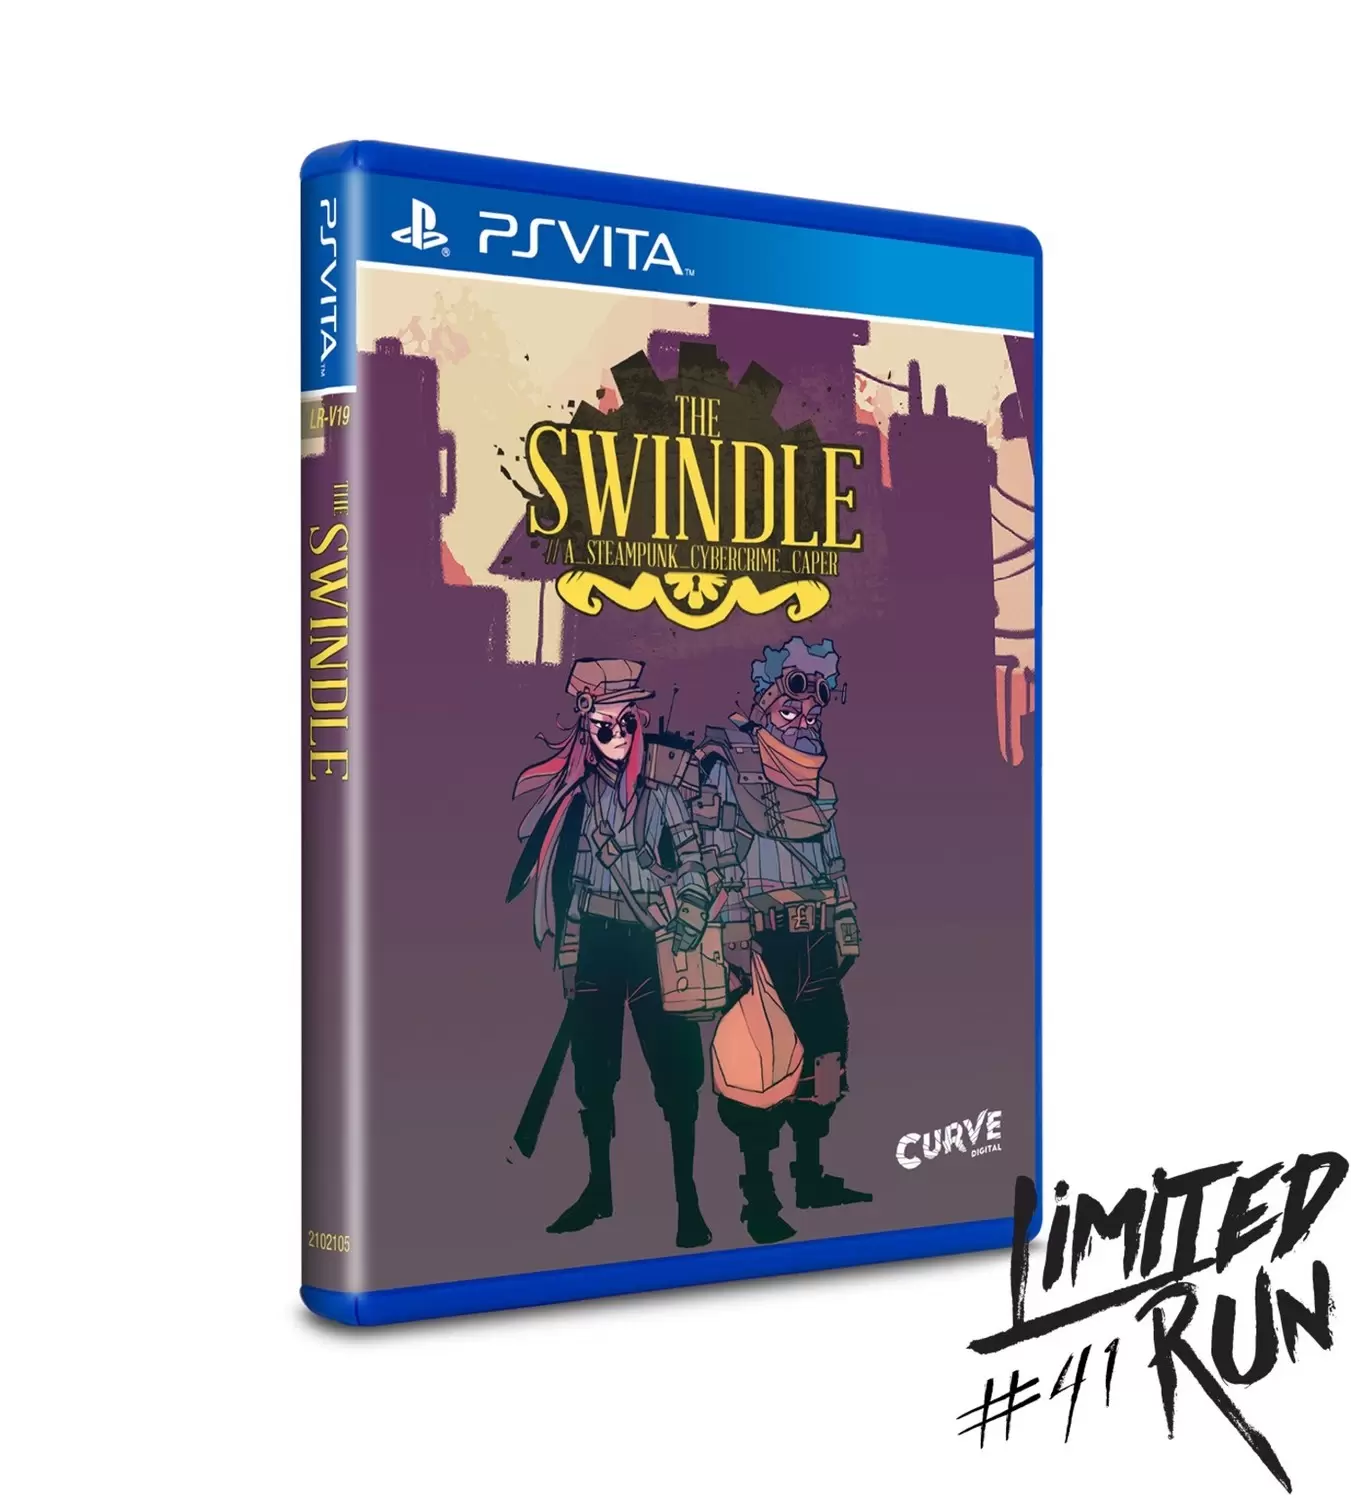 PS Vita Games - The Swindle